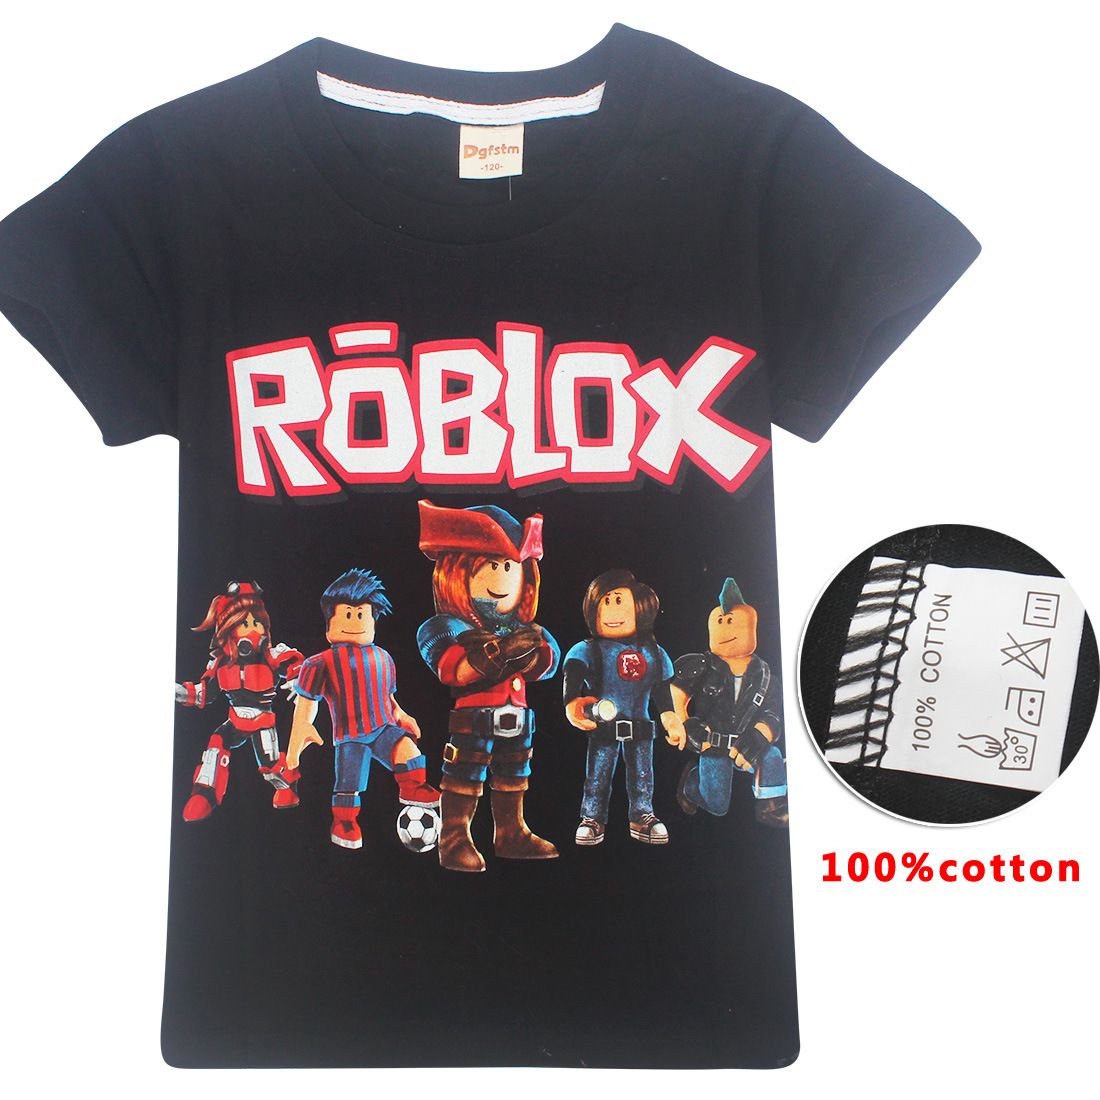 2020 Baby Boys Girls Roblox Print T Shirts 2018 Summer Shirt Tops 100 Cotton Children Tees Kids Clothing Cny750 From Unicorns Home 3 65 Dhgate Com - roblox like a g6